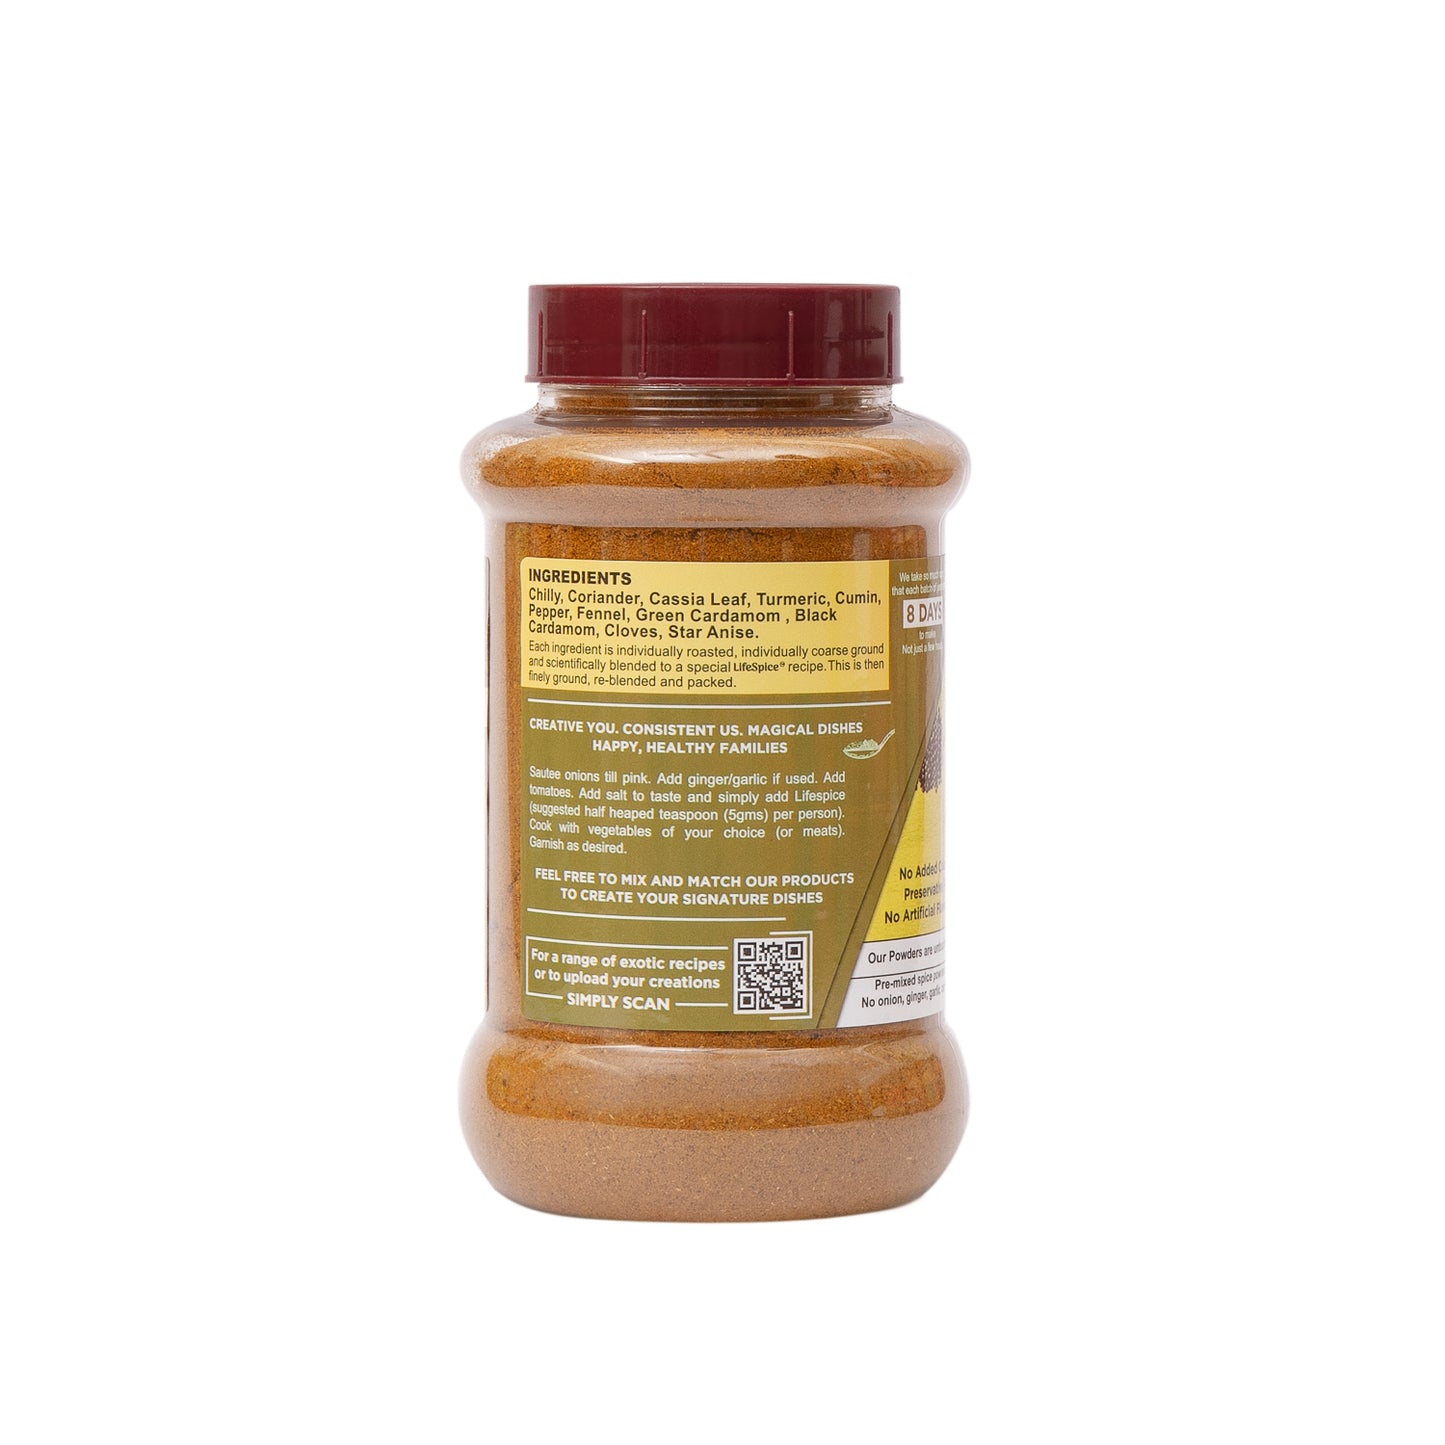 Lifespice - Sabzi Masala Powder 200g PET Jar